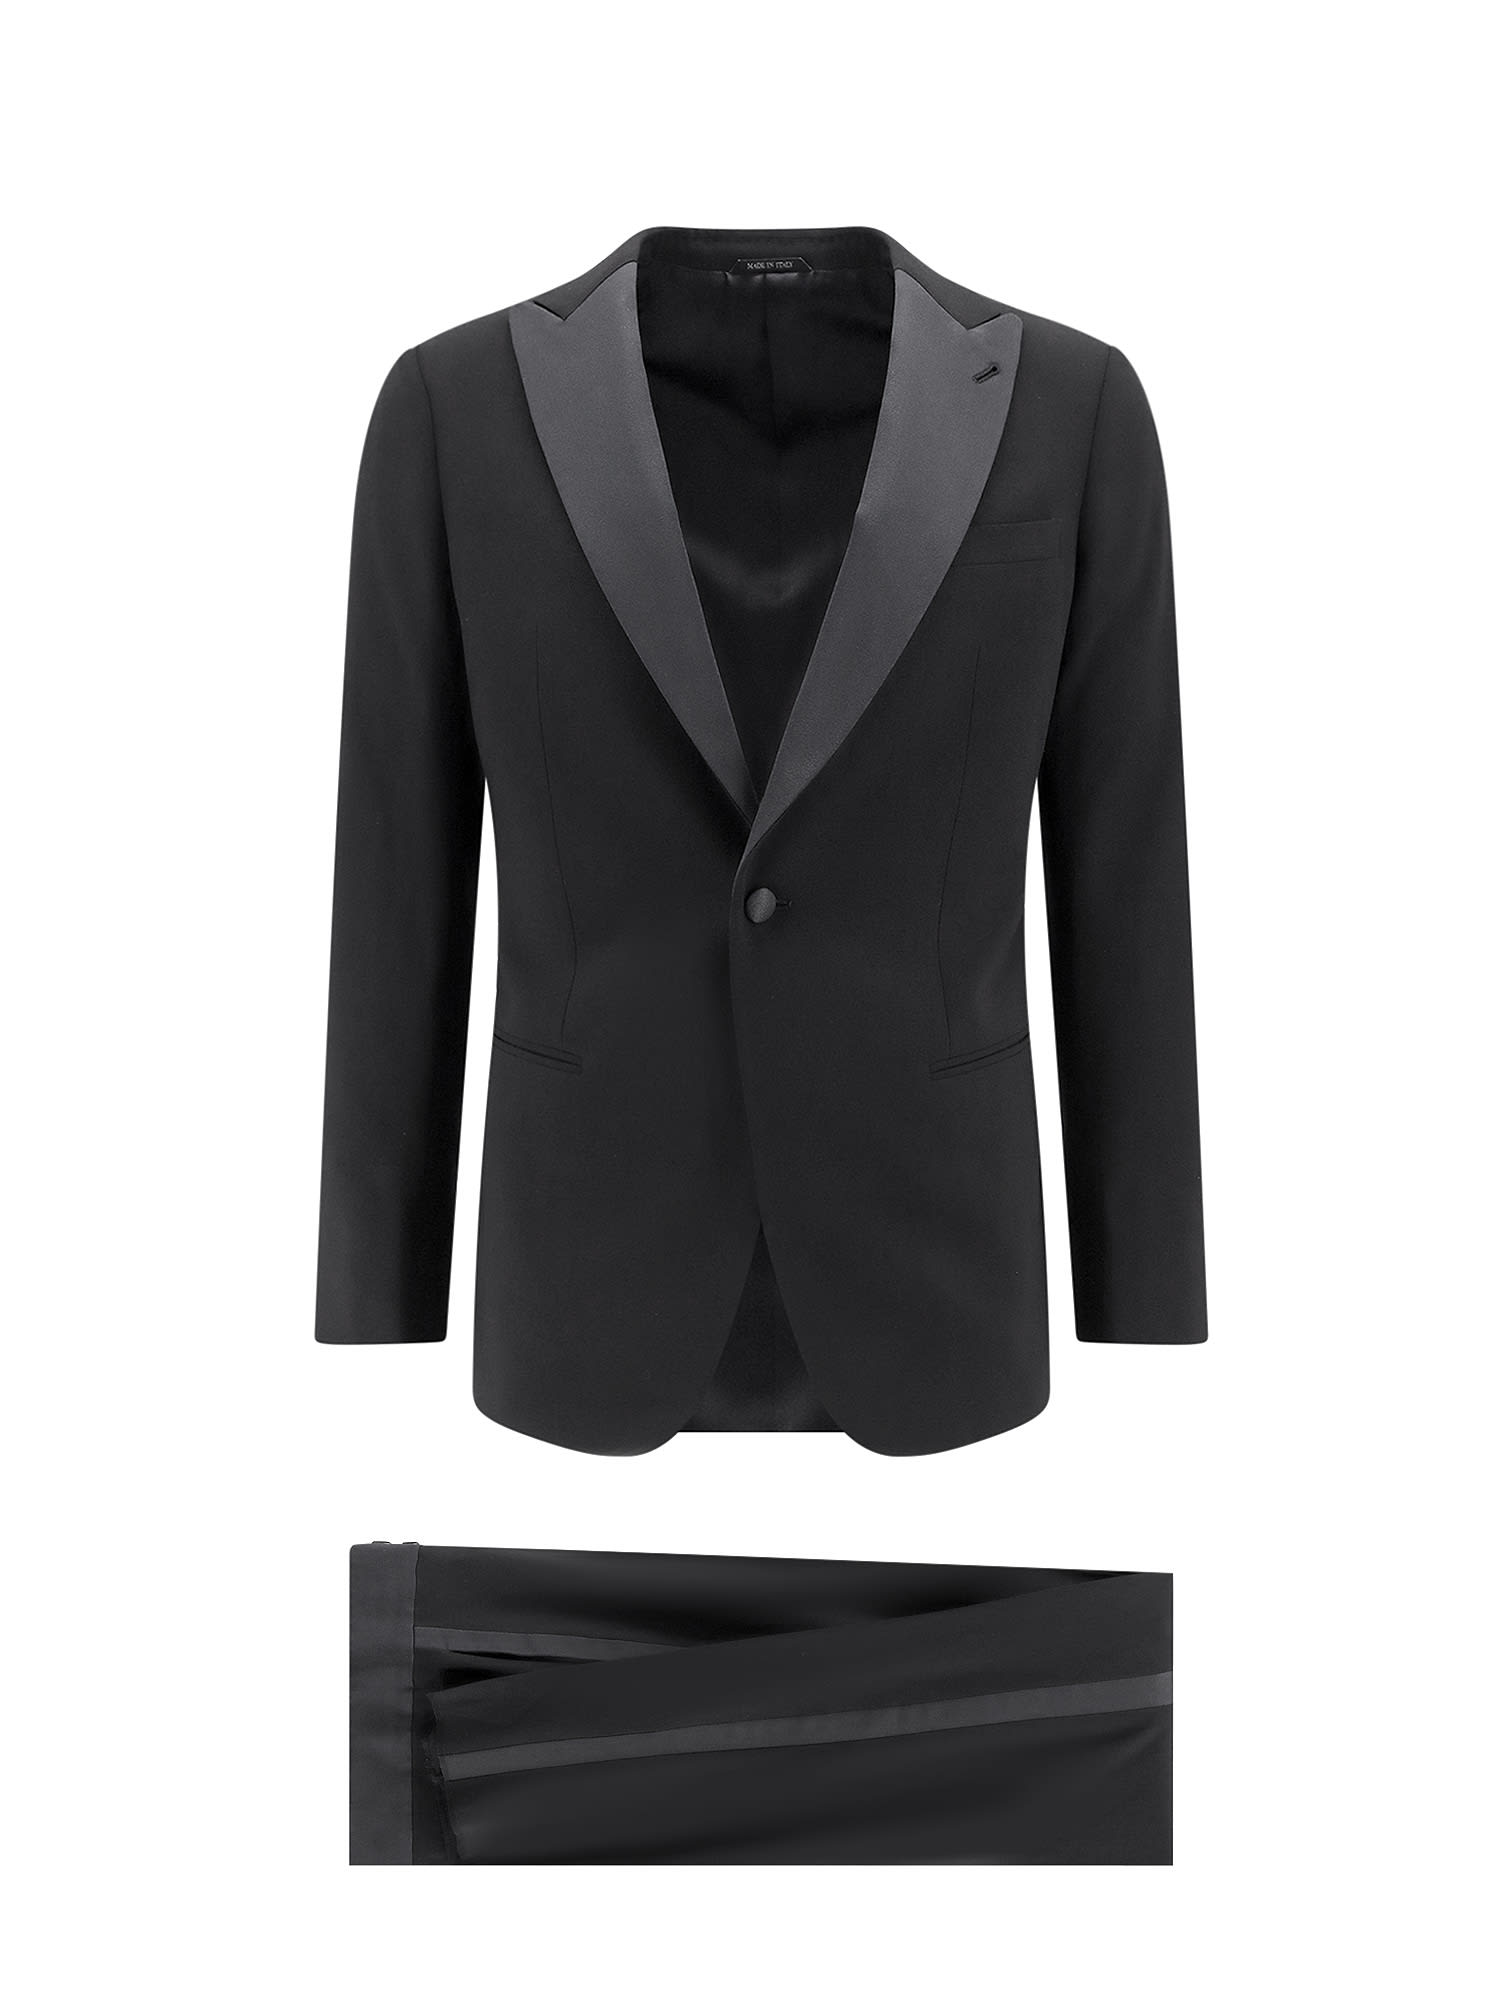 giorgio armani black fabric suit